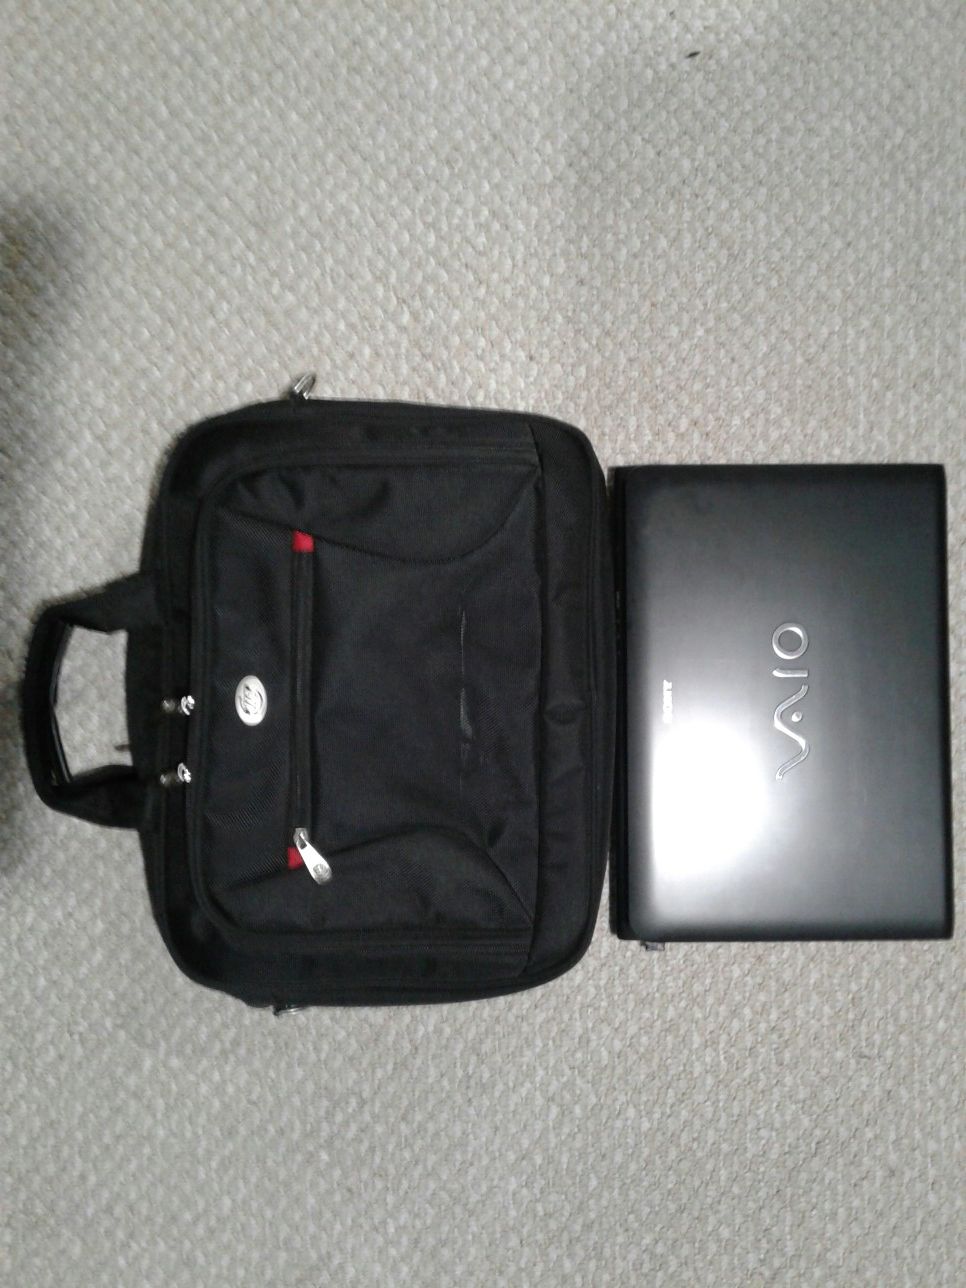 Sony laptop model SVE14l11u